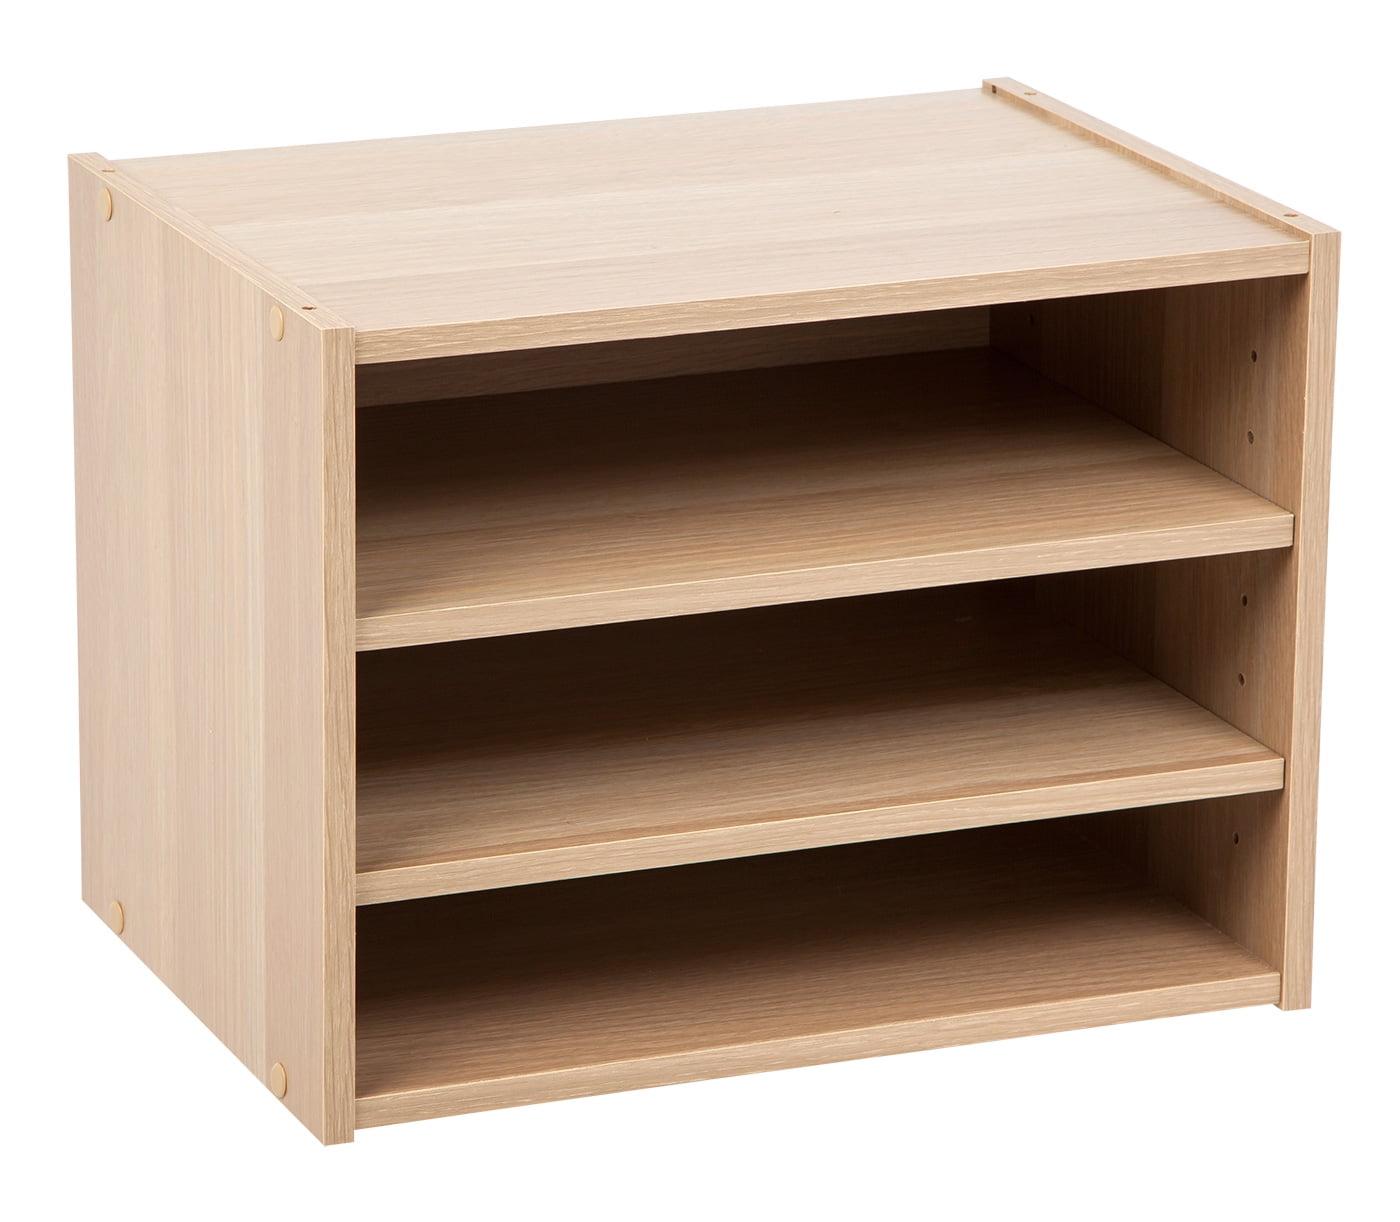 Tachi Modular Light Brown Wood Stackable Storage Organizer with Adjustable Shelves